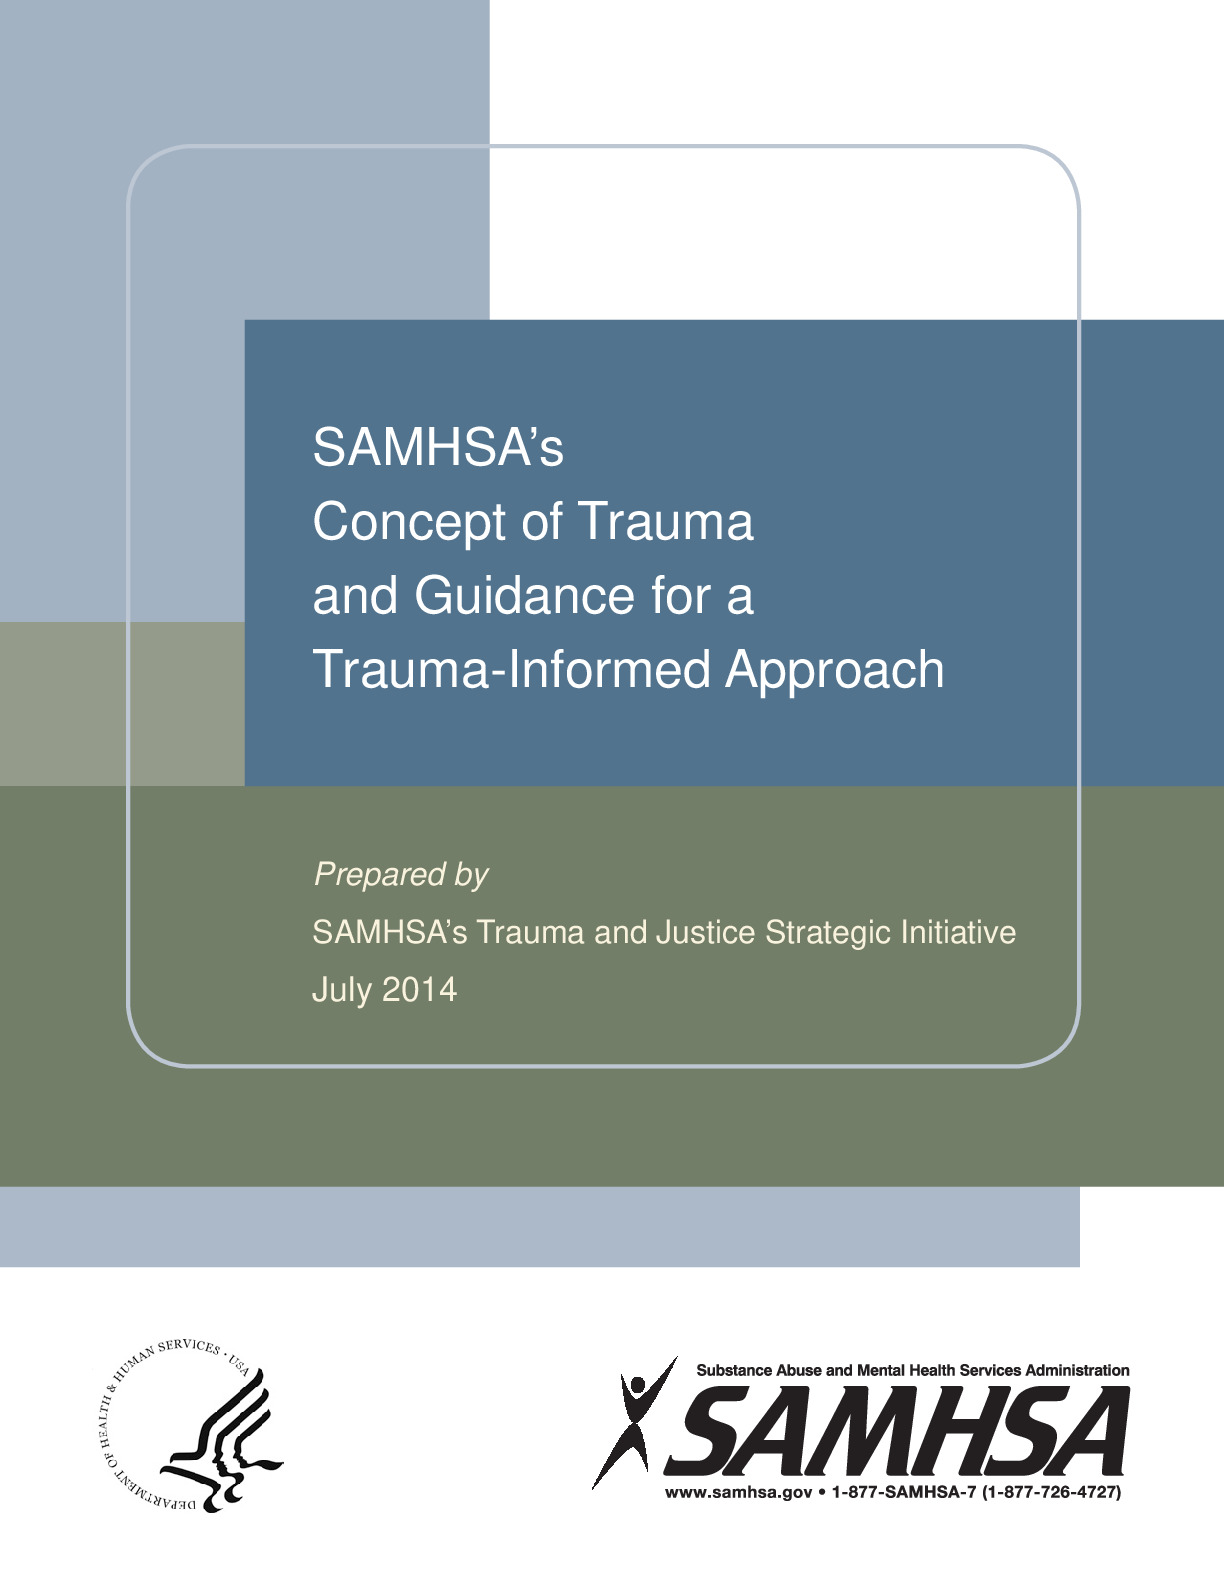 SAMHSA guidance for TI Approach 2014